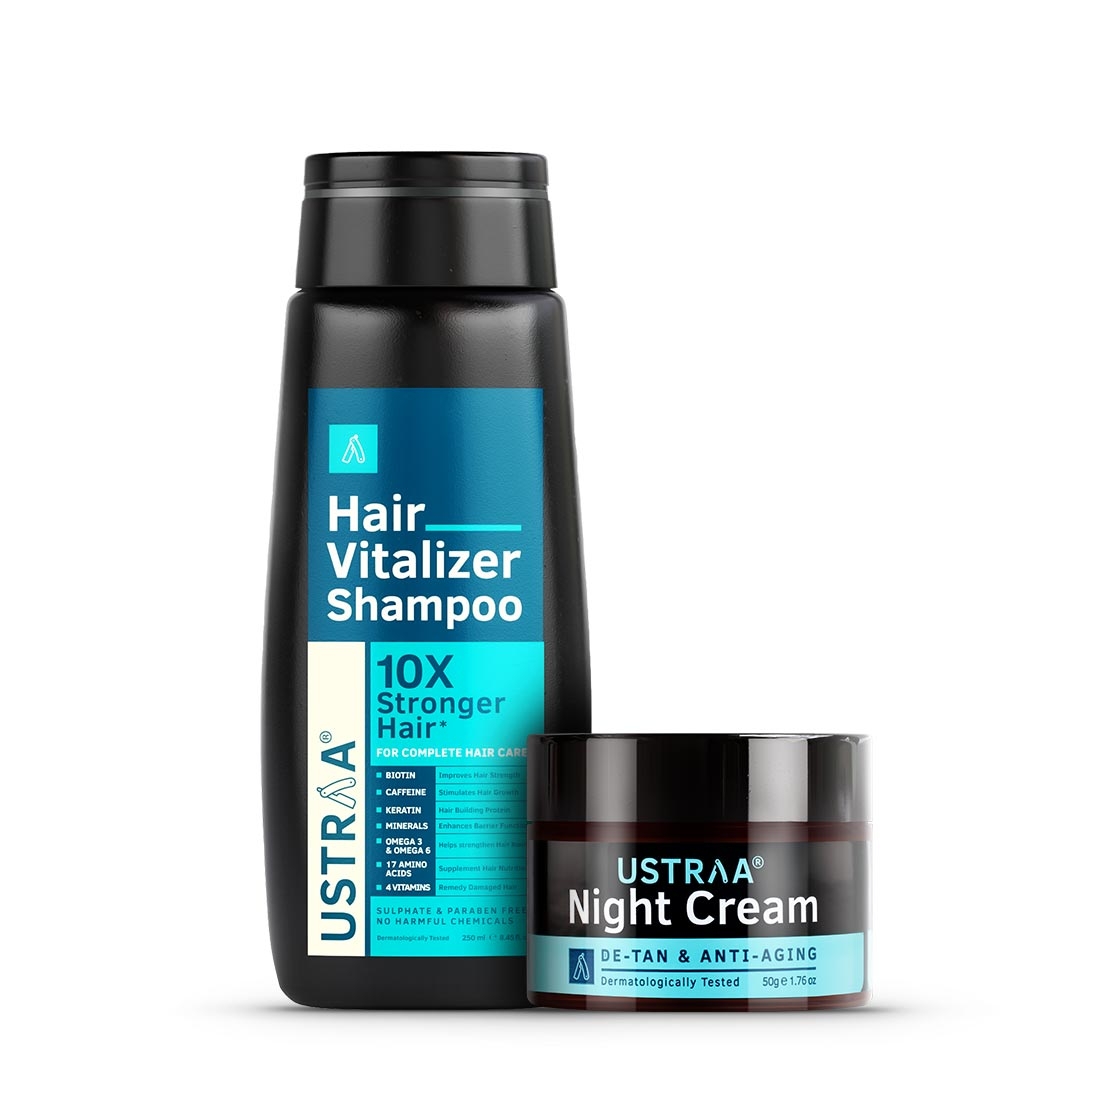 Ustraa | Ustraa Hair Vitalizer Shampoo - 250ml & Night Cream - De Tan And Anti Aging - 50g